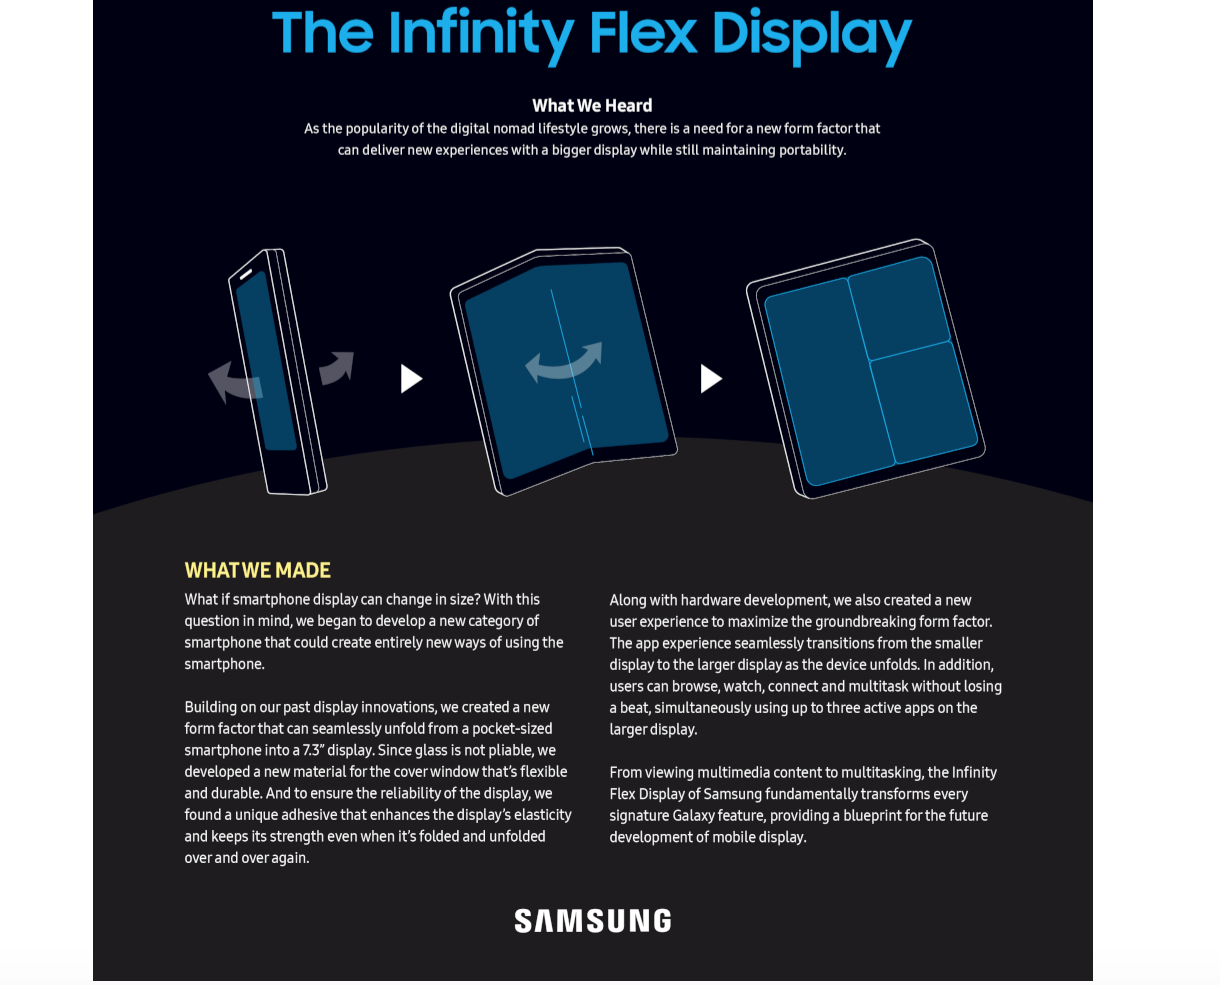 Samsung's Infinity Flex Display Smartphone Transforms Into a 7.3